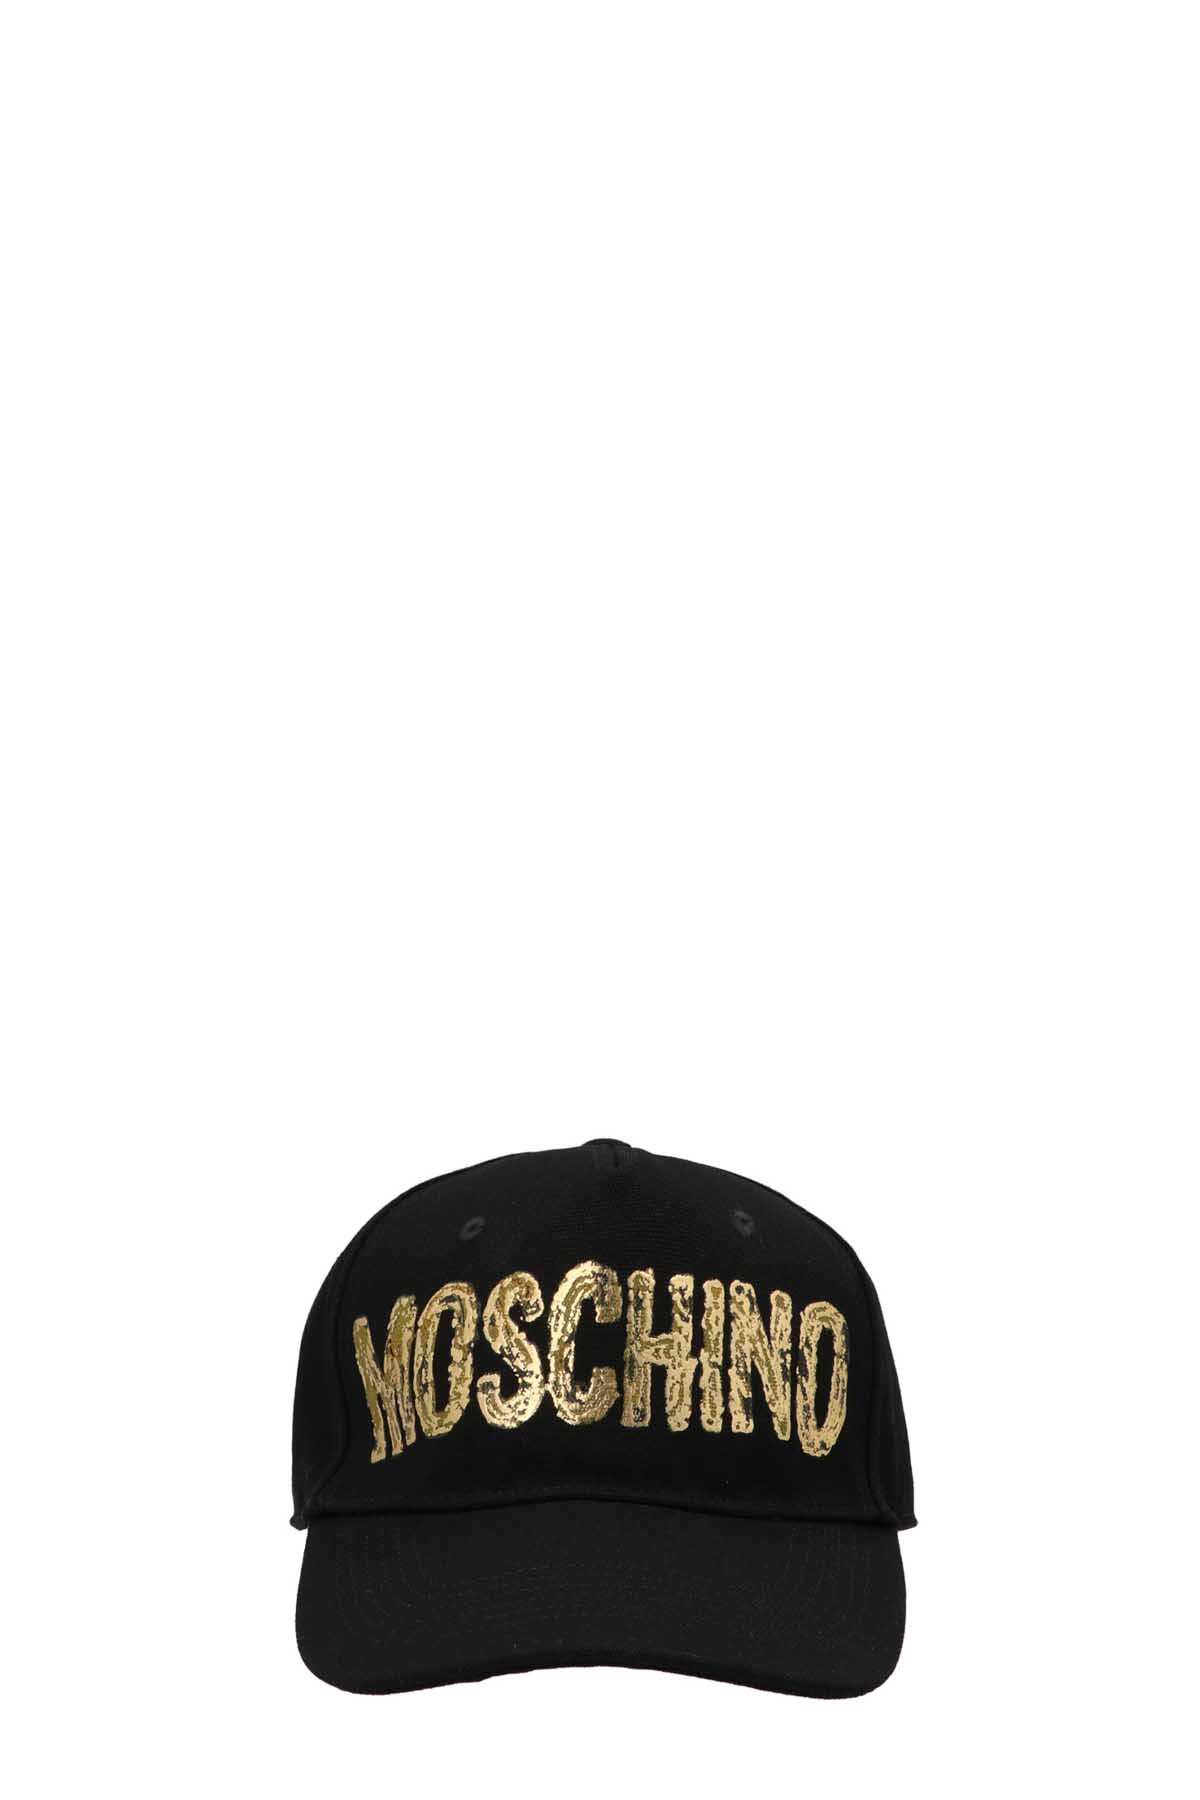 MOSCHINO Printed Logo Cap